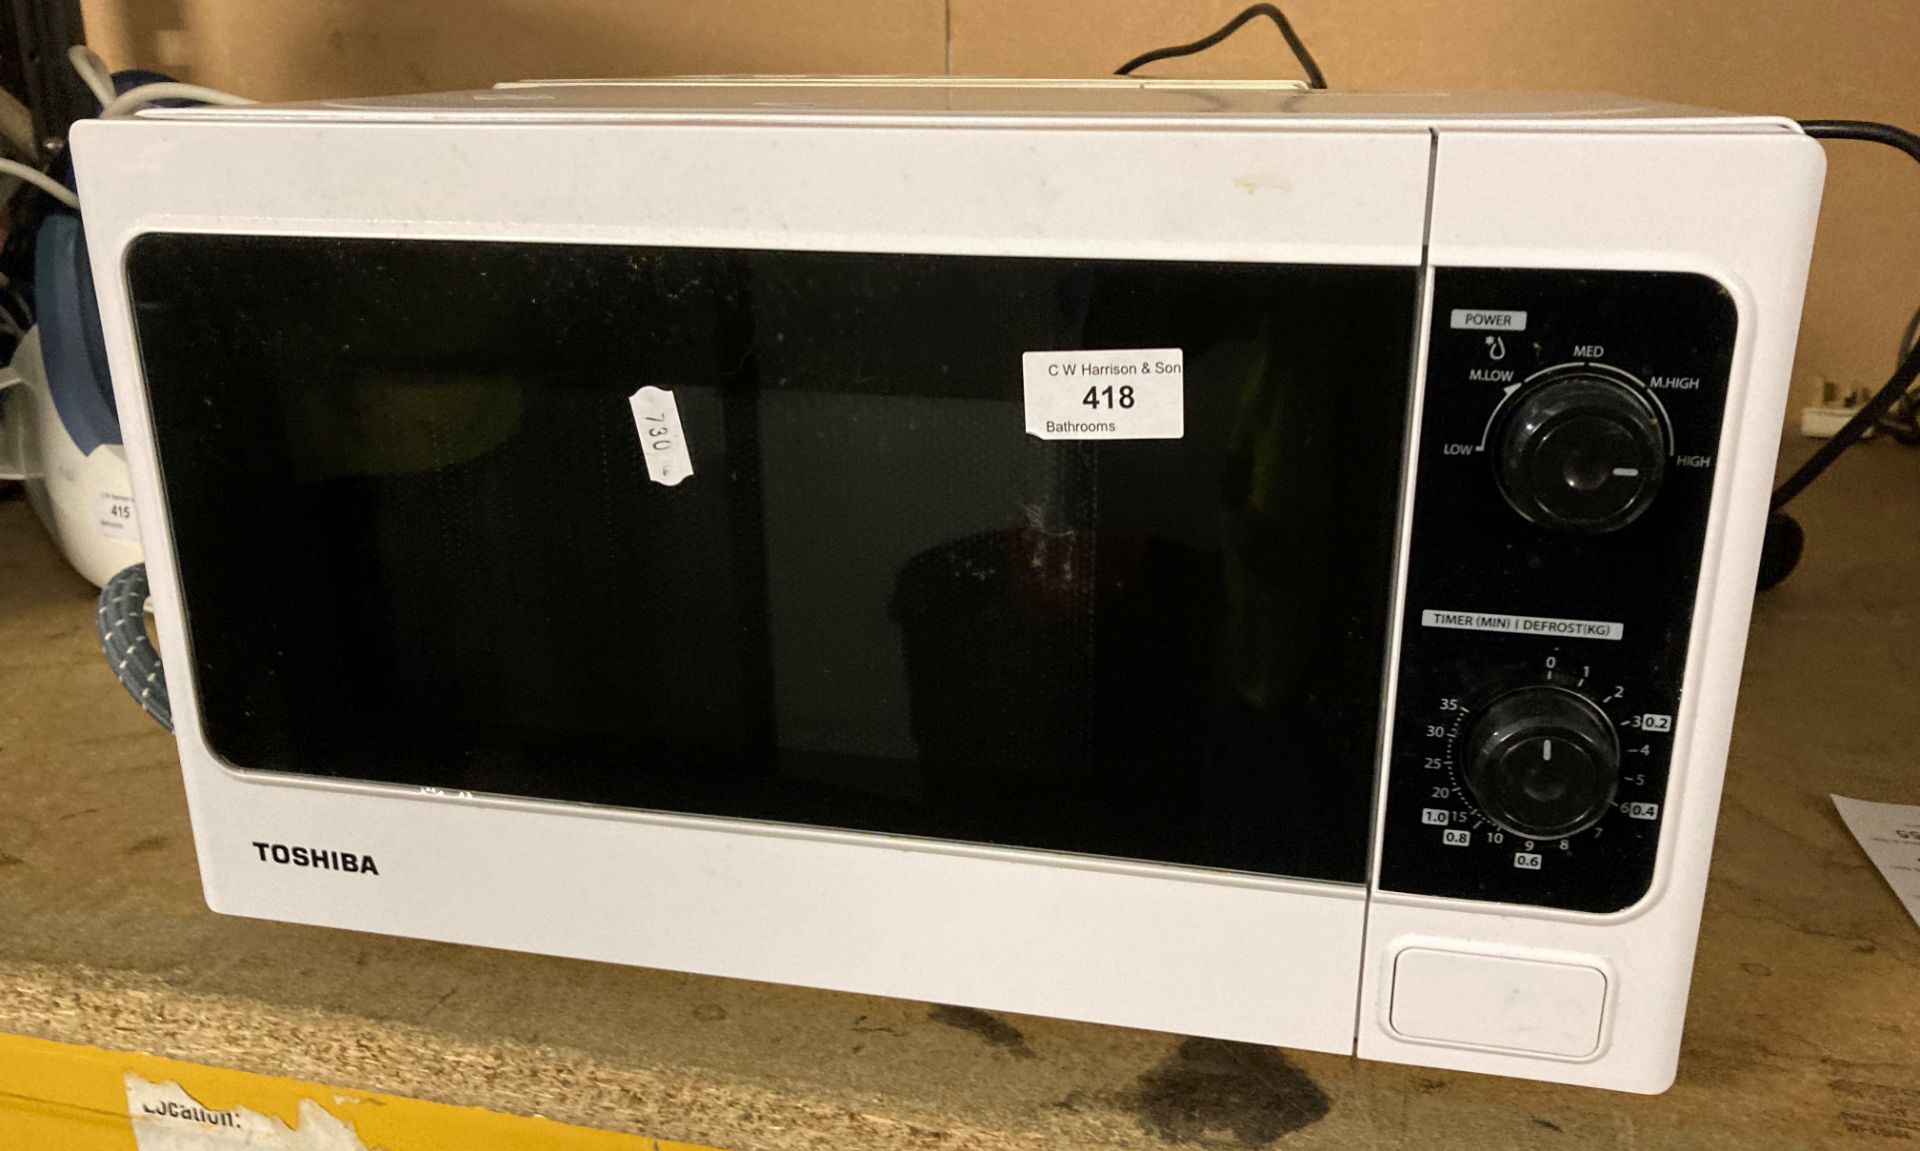 Toshiba microwave oven (saleroom location: PO)